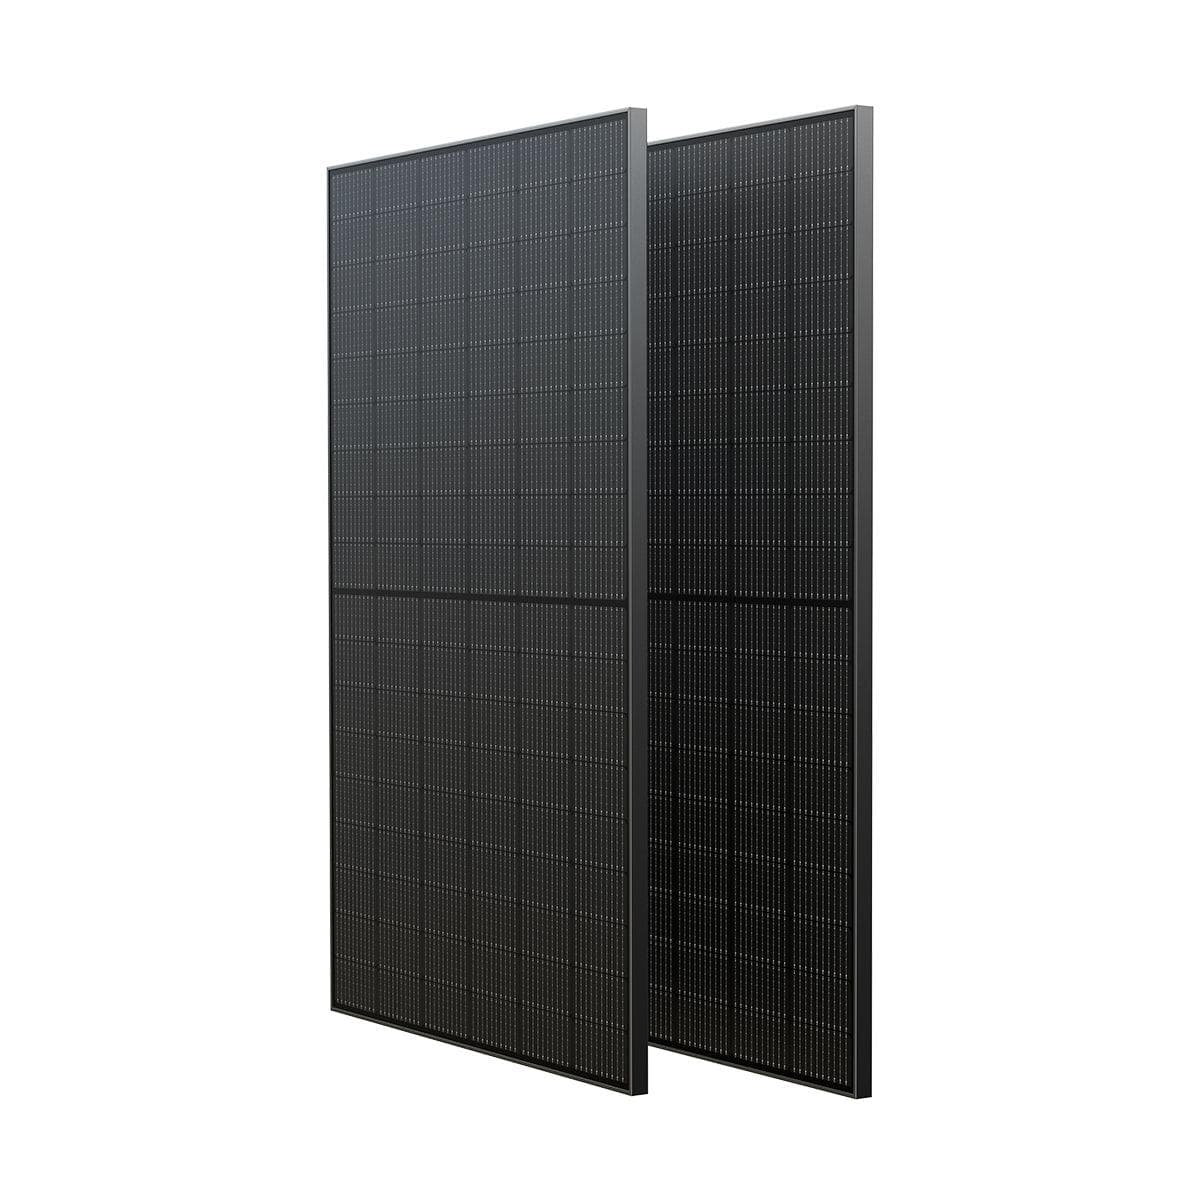 EcoFlow 400w Rigid Solar Panel - New Star Living